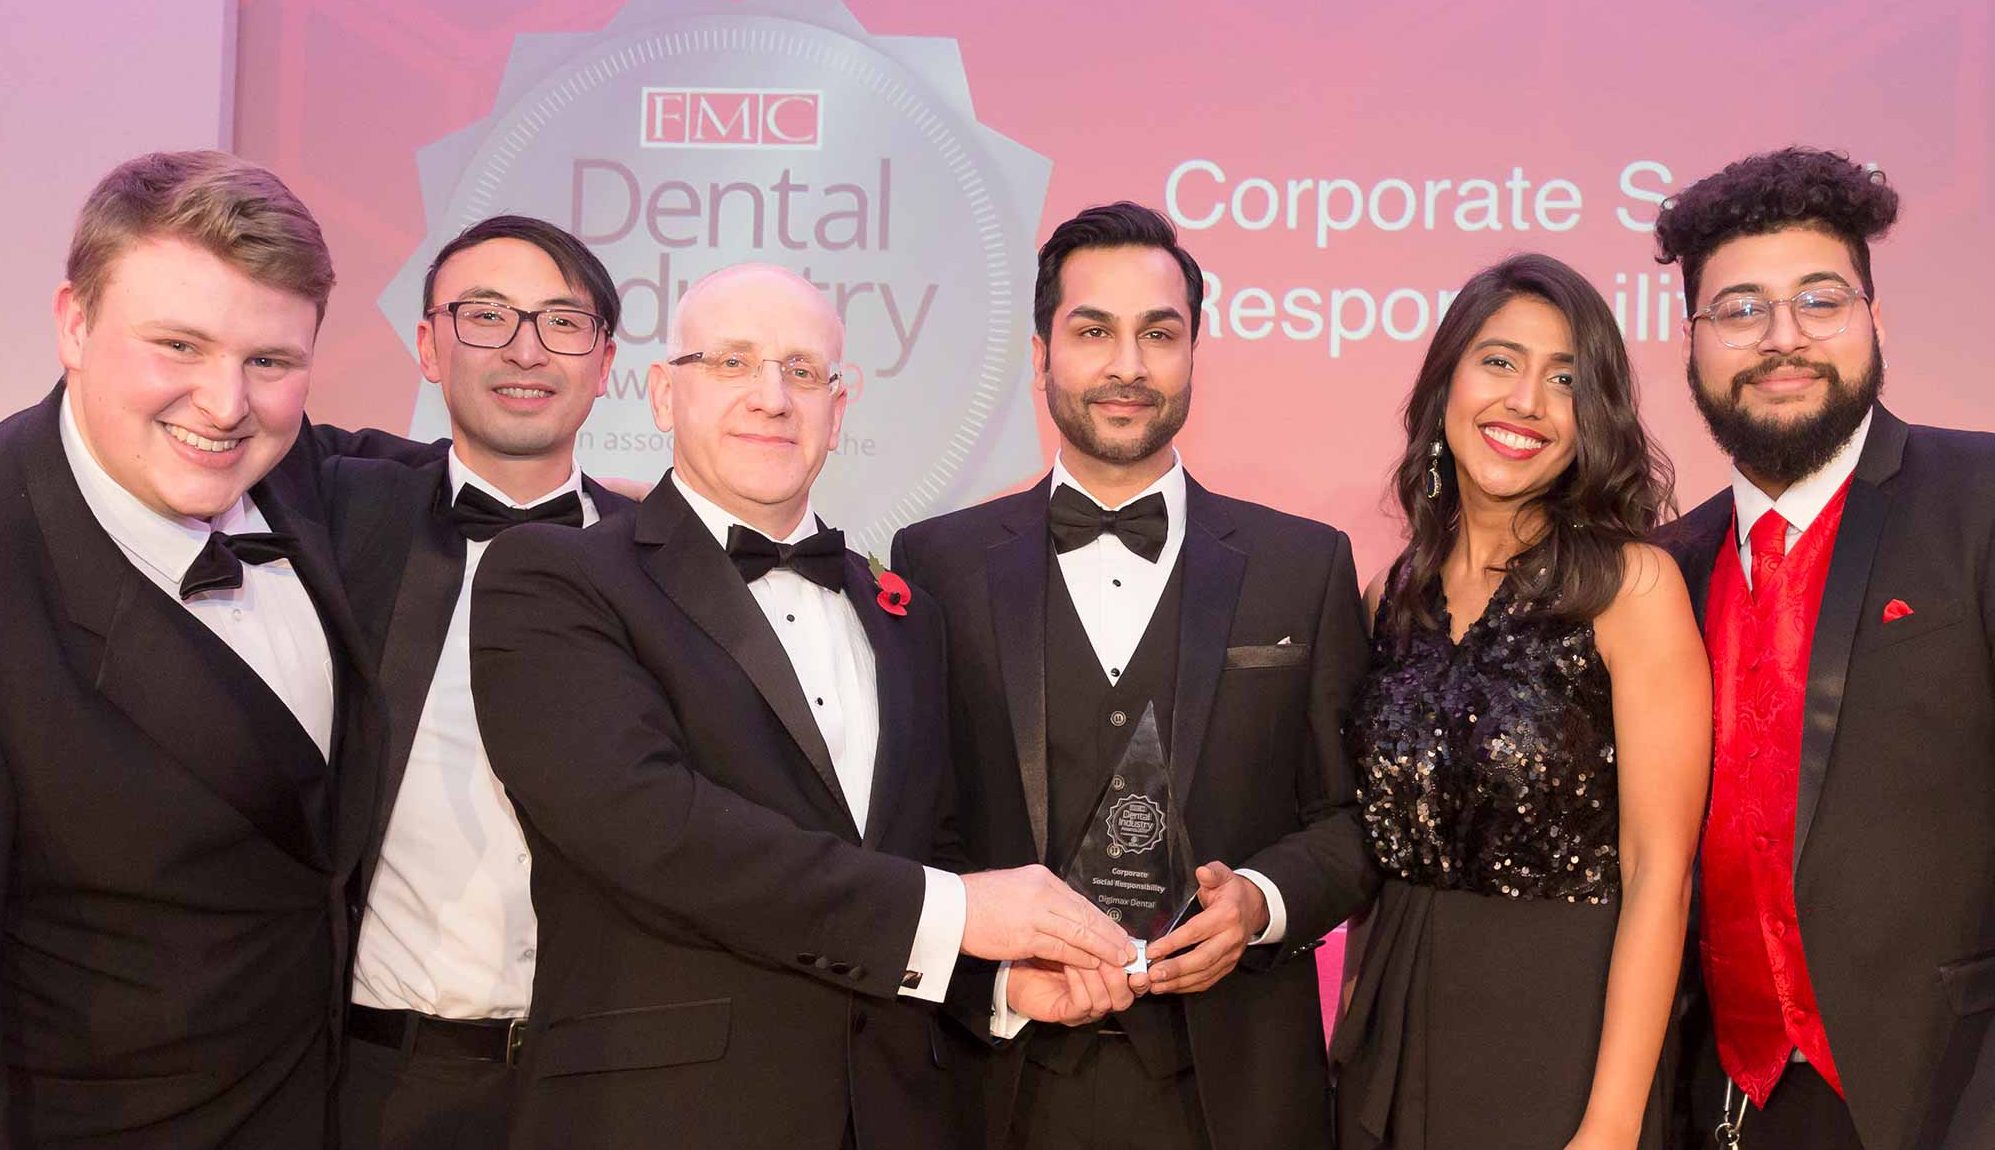 Dental Industry Awards 2019 Corporate Social Responsibility